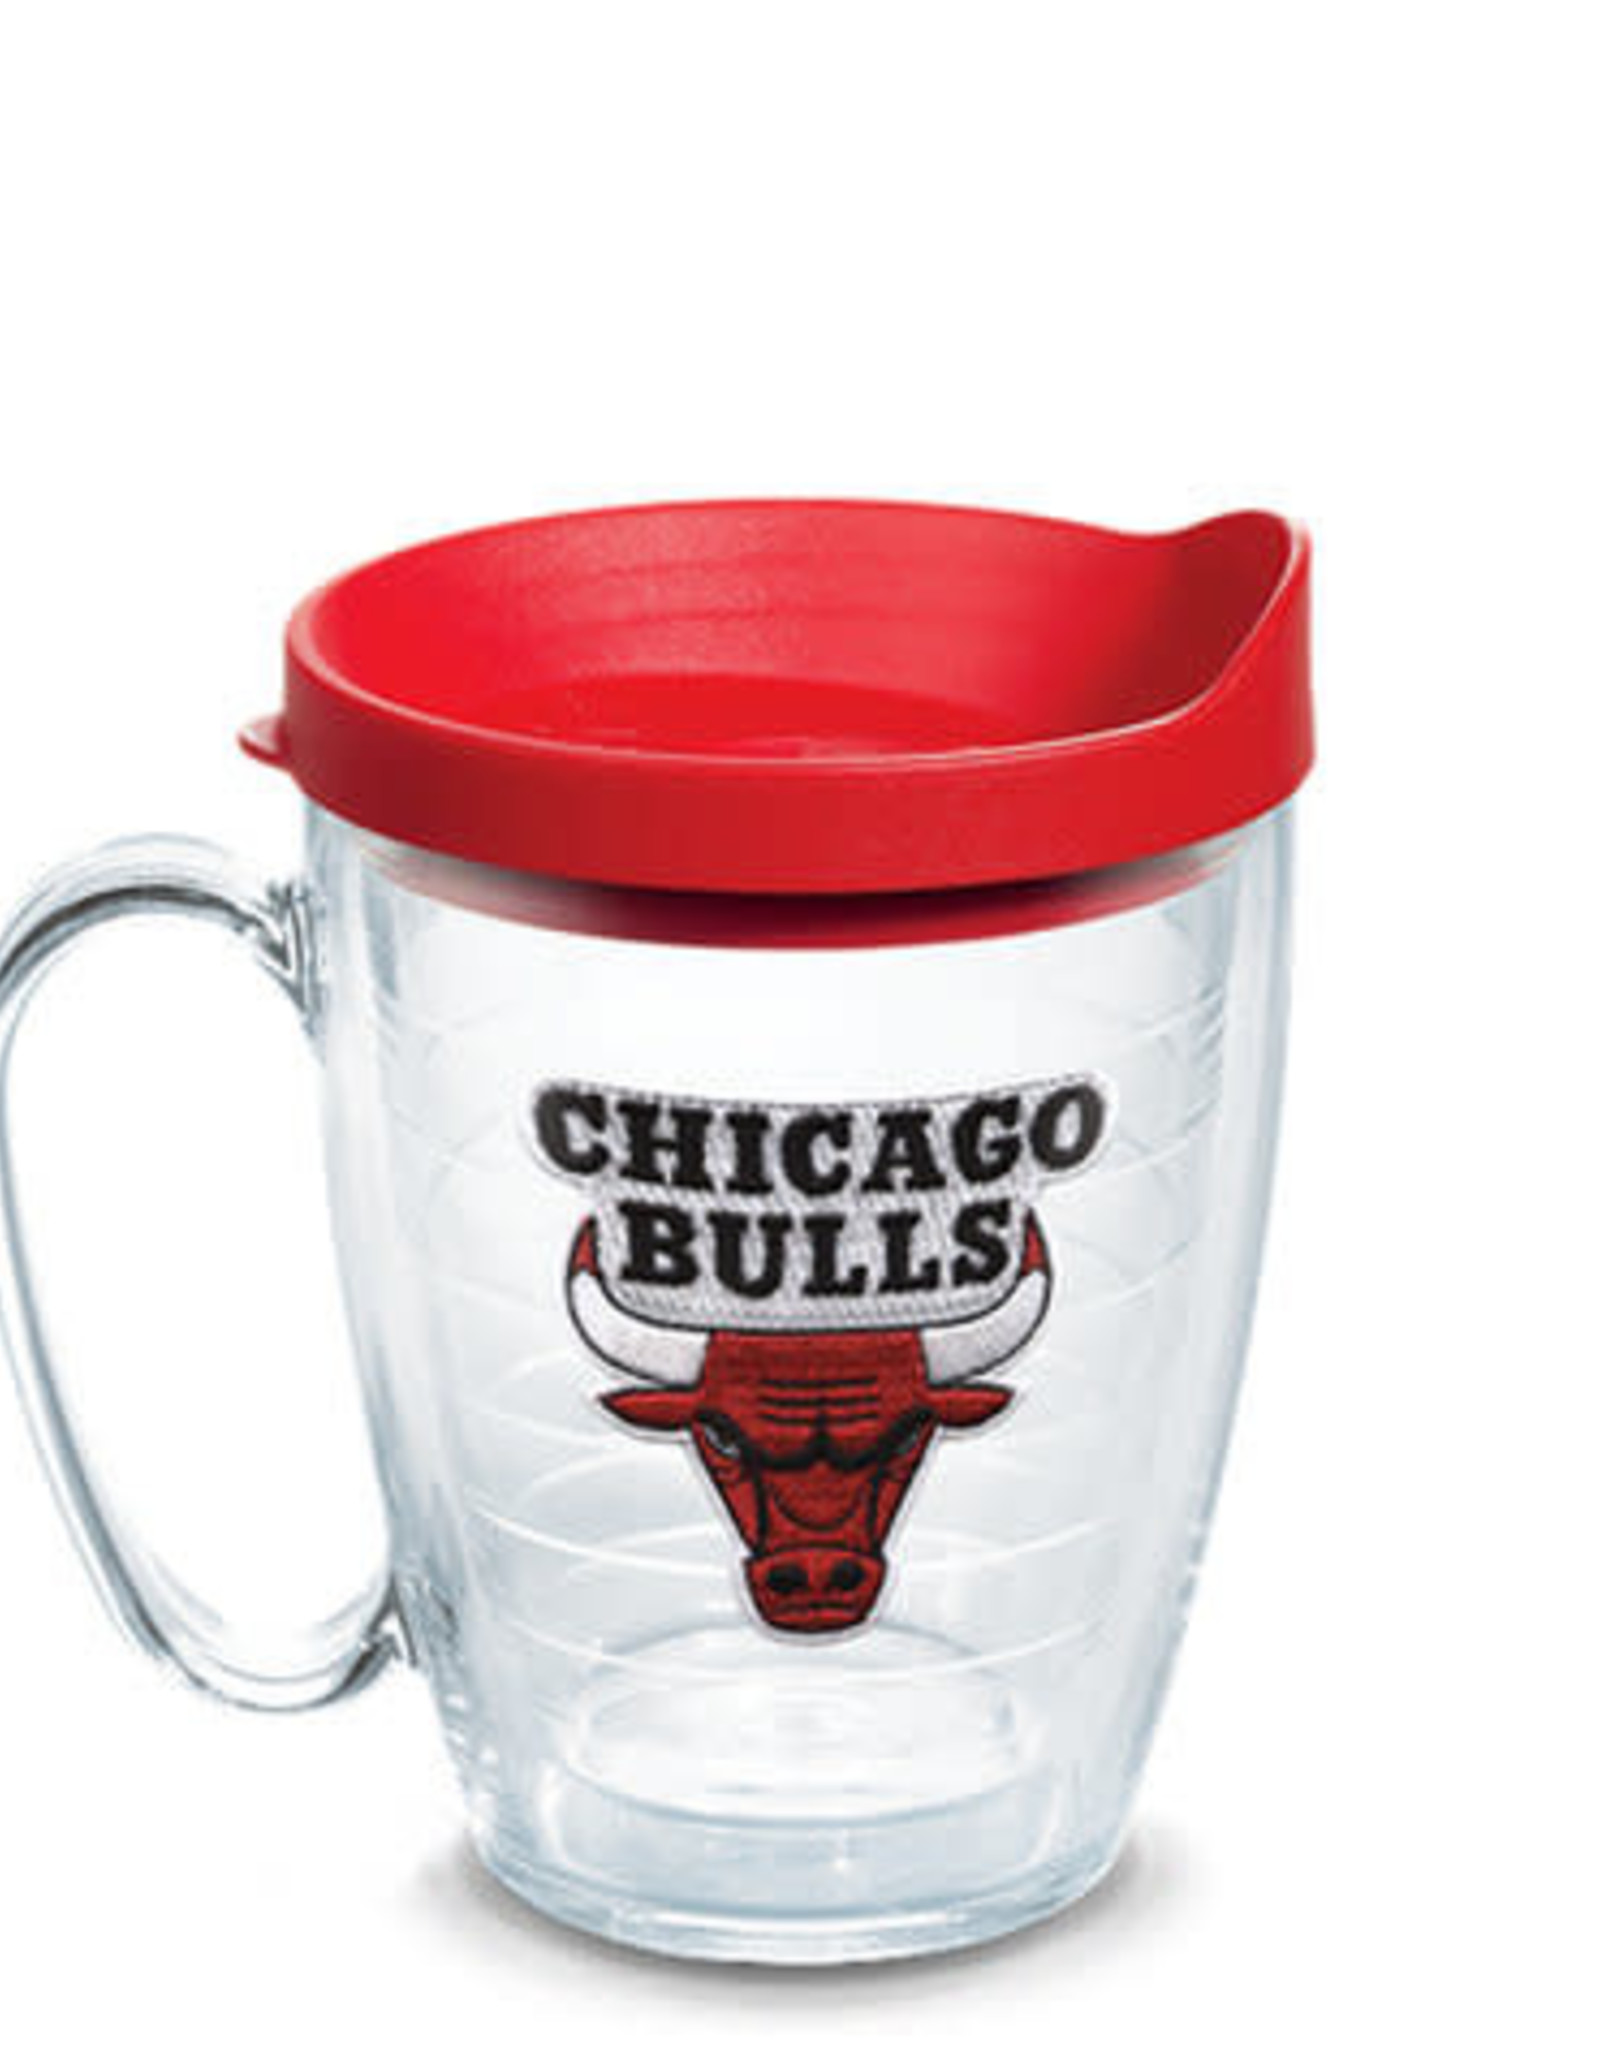 Tervis Tumbler Mug 16oz. Chicago Bulls